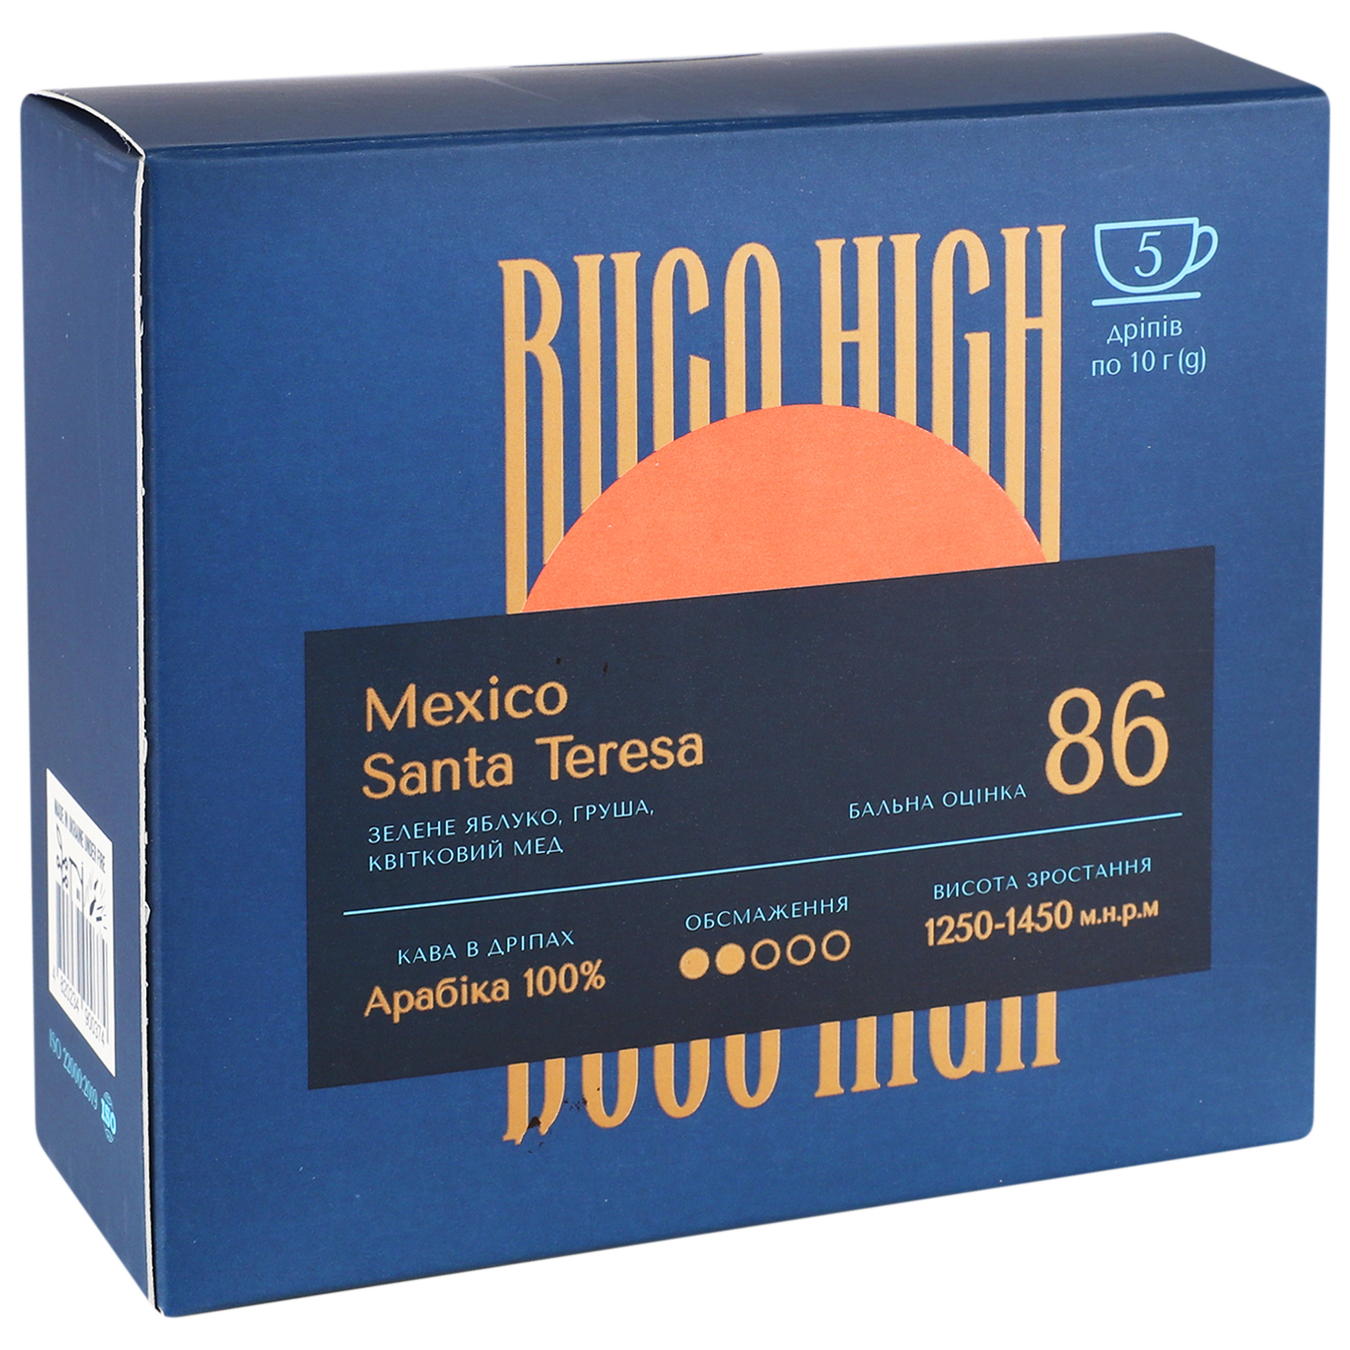 Кофе в дрипах Buco High Mexico 5*10г 2